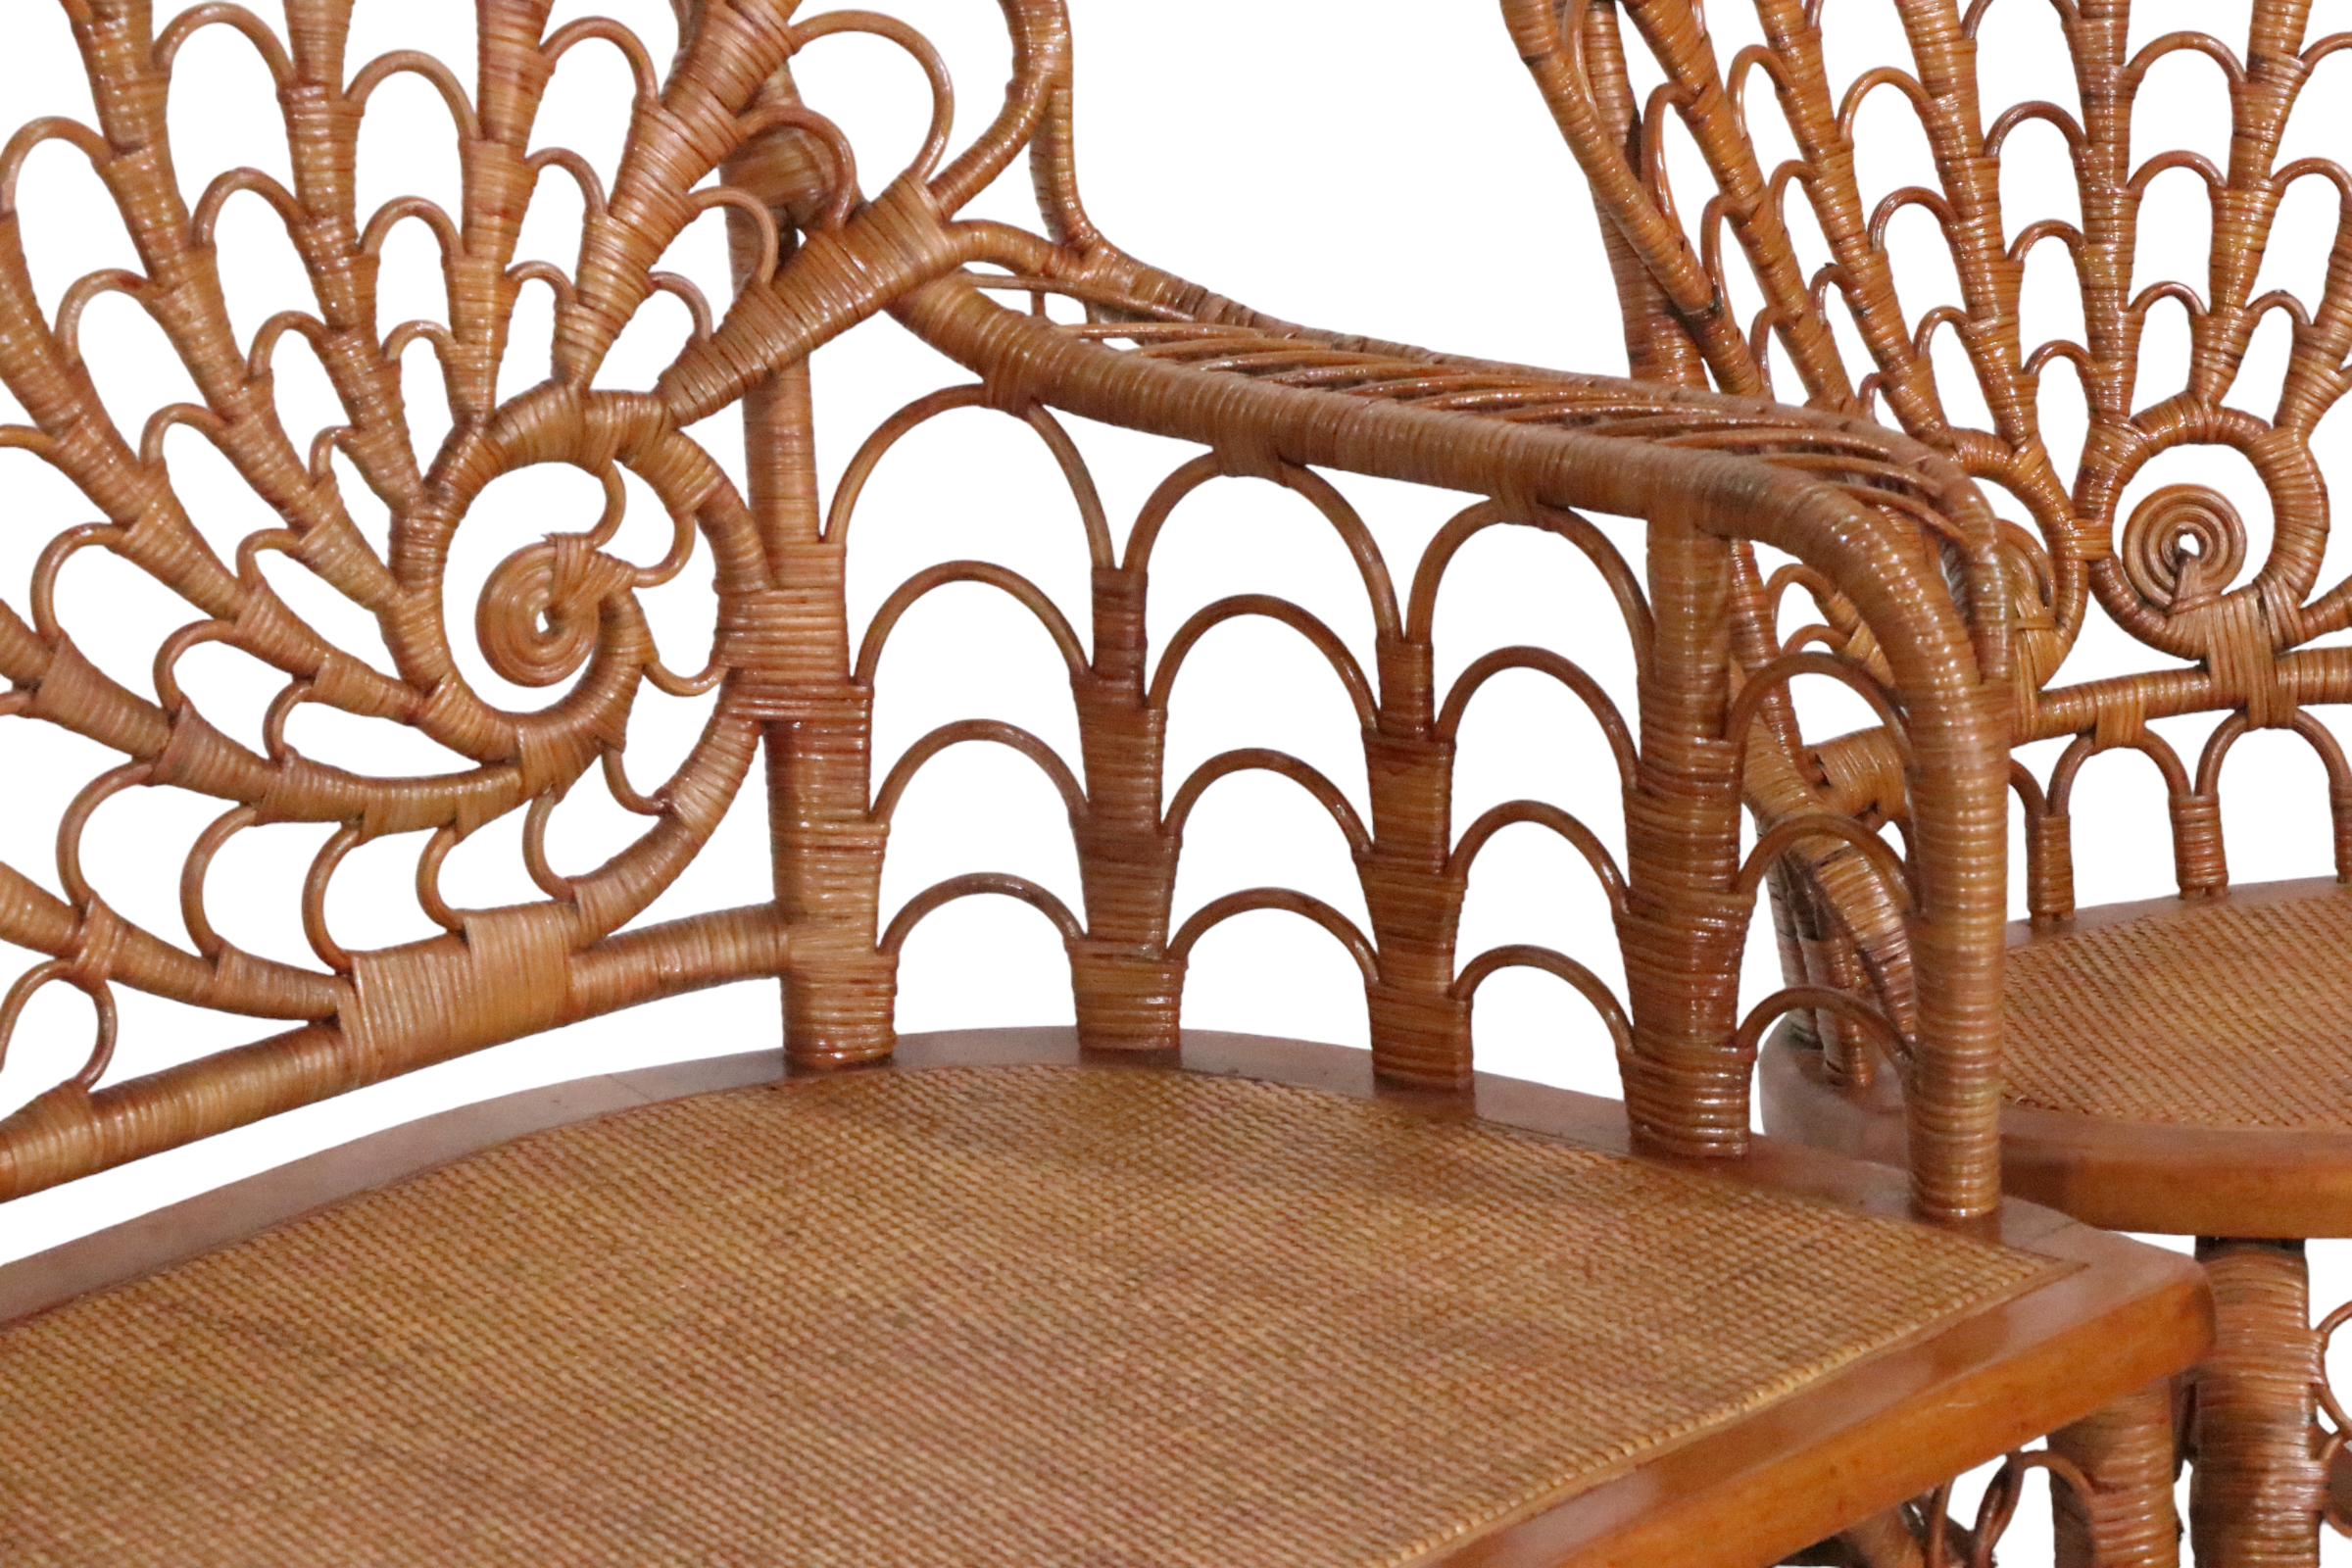 ornate rocking chair